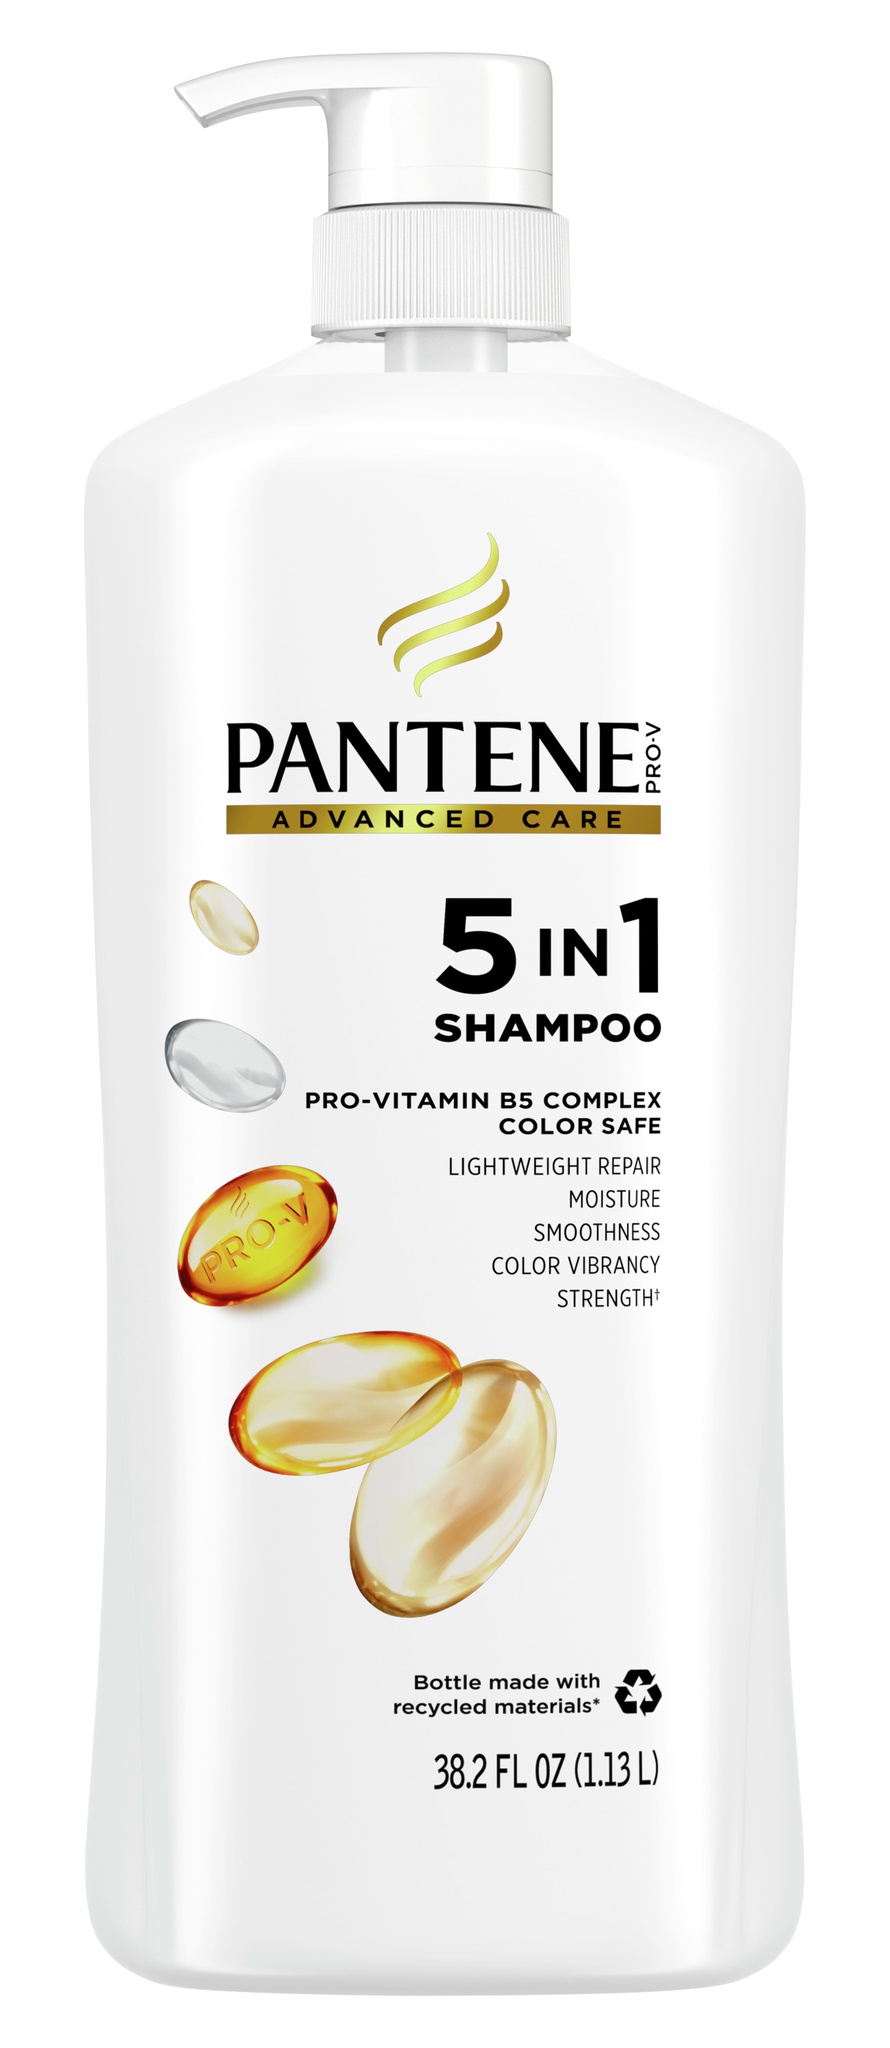 Pantene Pro-V Advanced Care 5 in 1 Shampoo